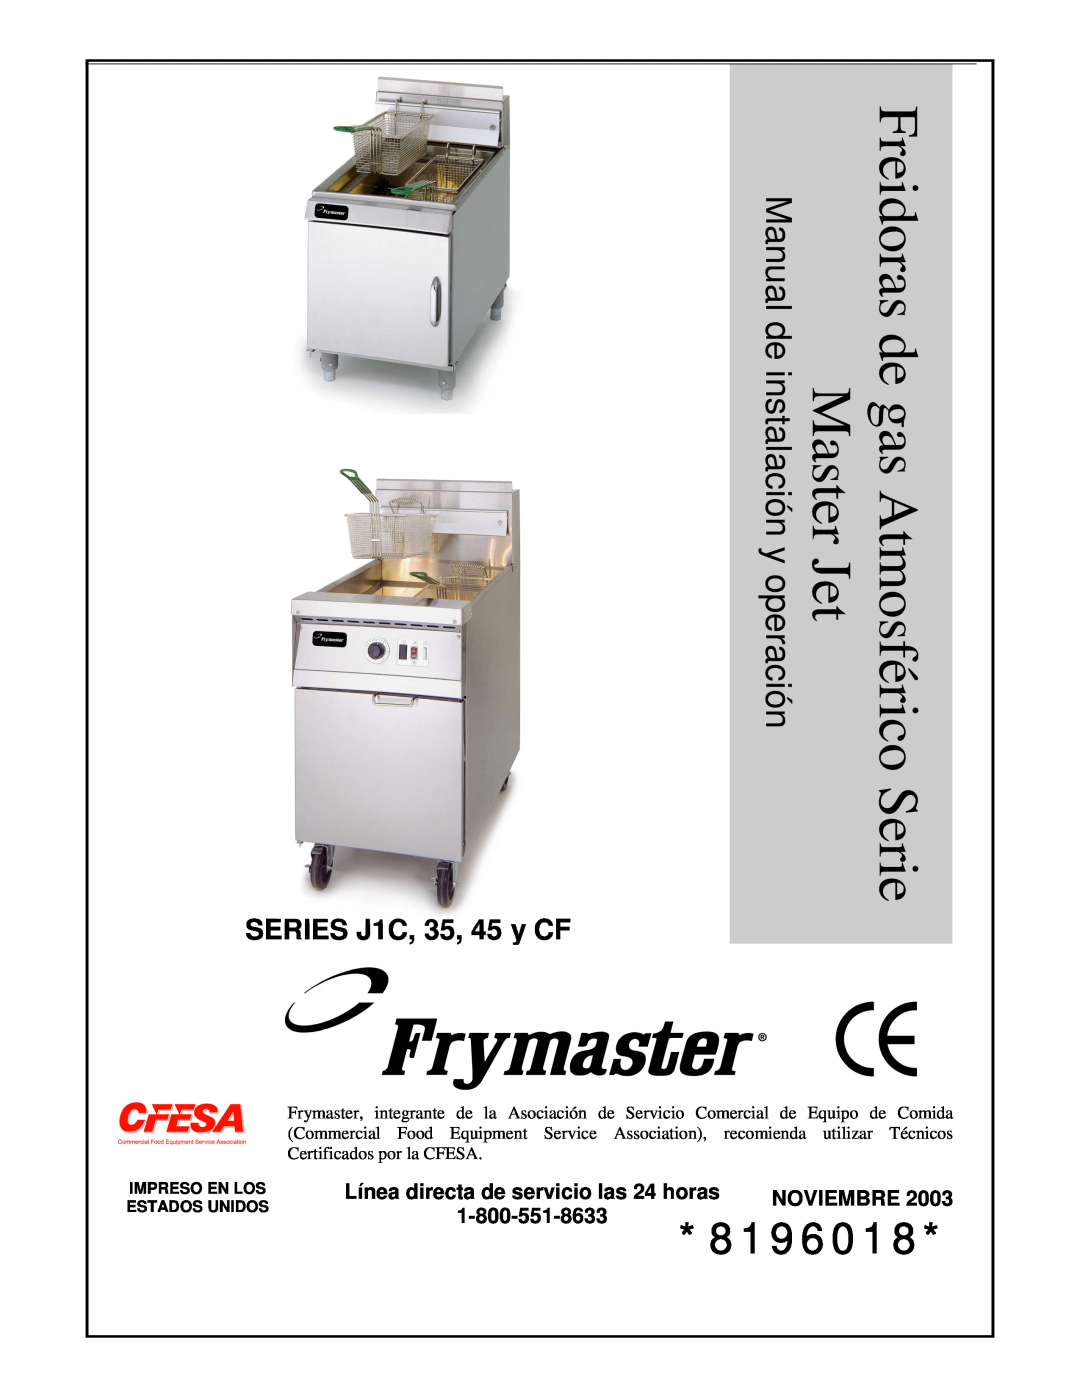 Frymaster manual SERIES J1C, 35, 45 y CF, Freidoras de gas Atmosférico Serie Master Jet, 8196018, 1-800-551-8633 